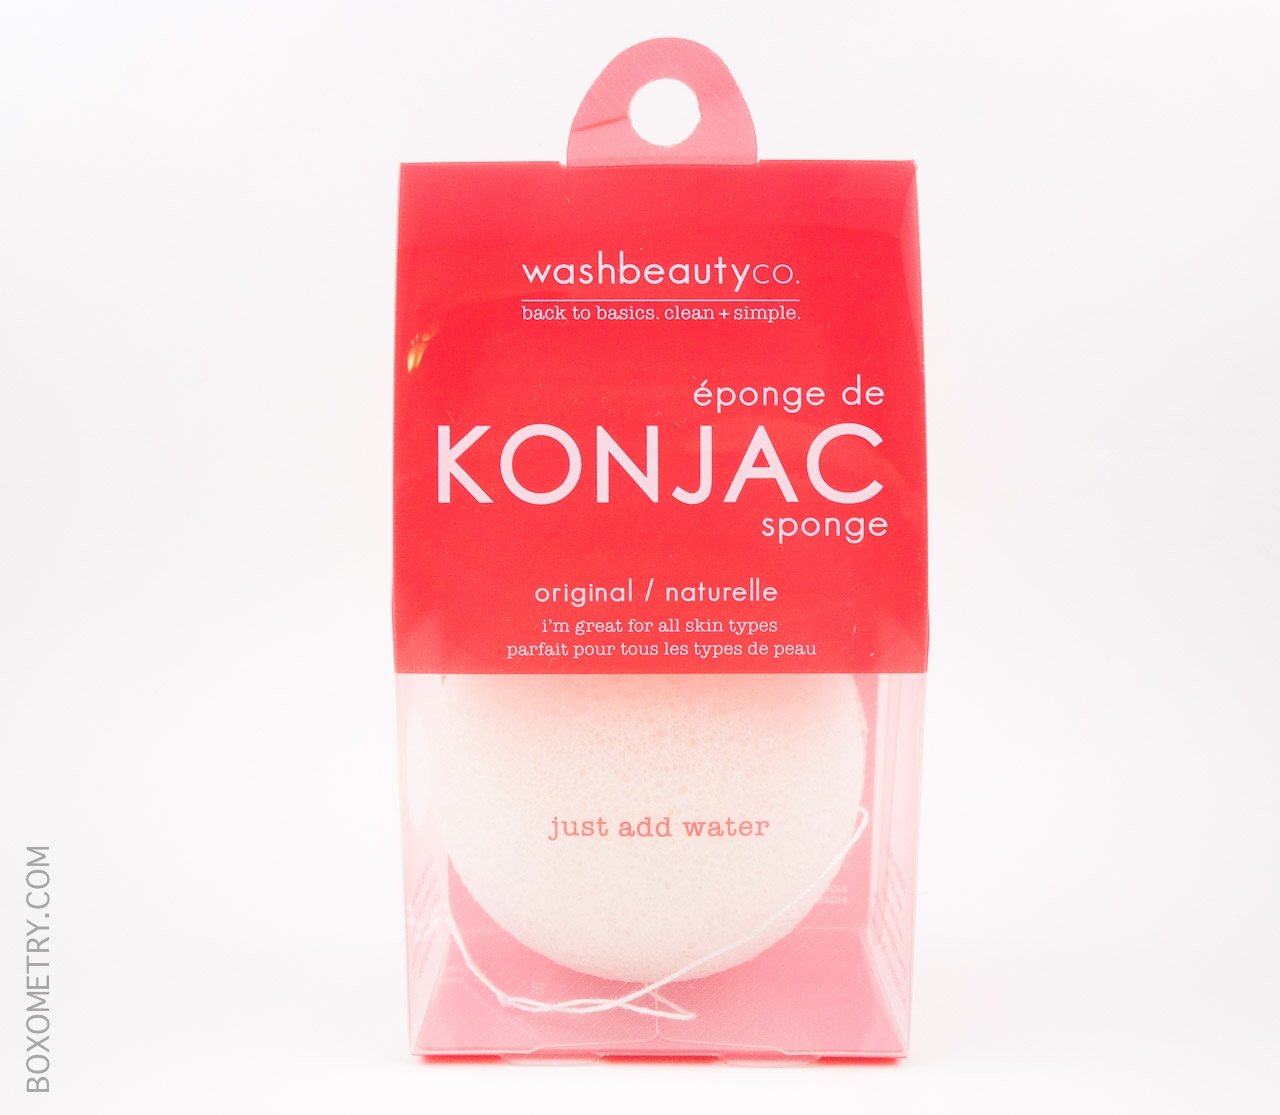 Boxometry Kloverbox June 2015 Review - Wash Beauty original Konjac Sponge